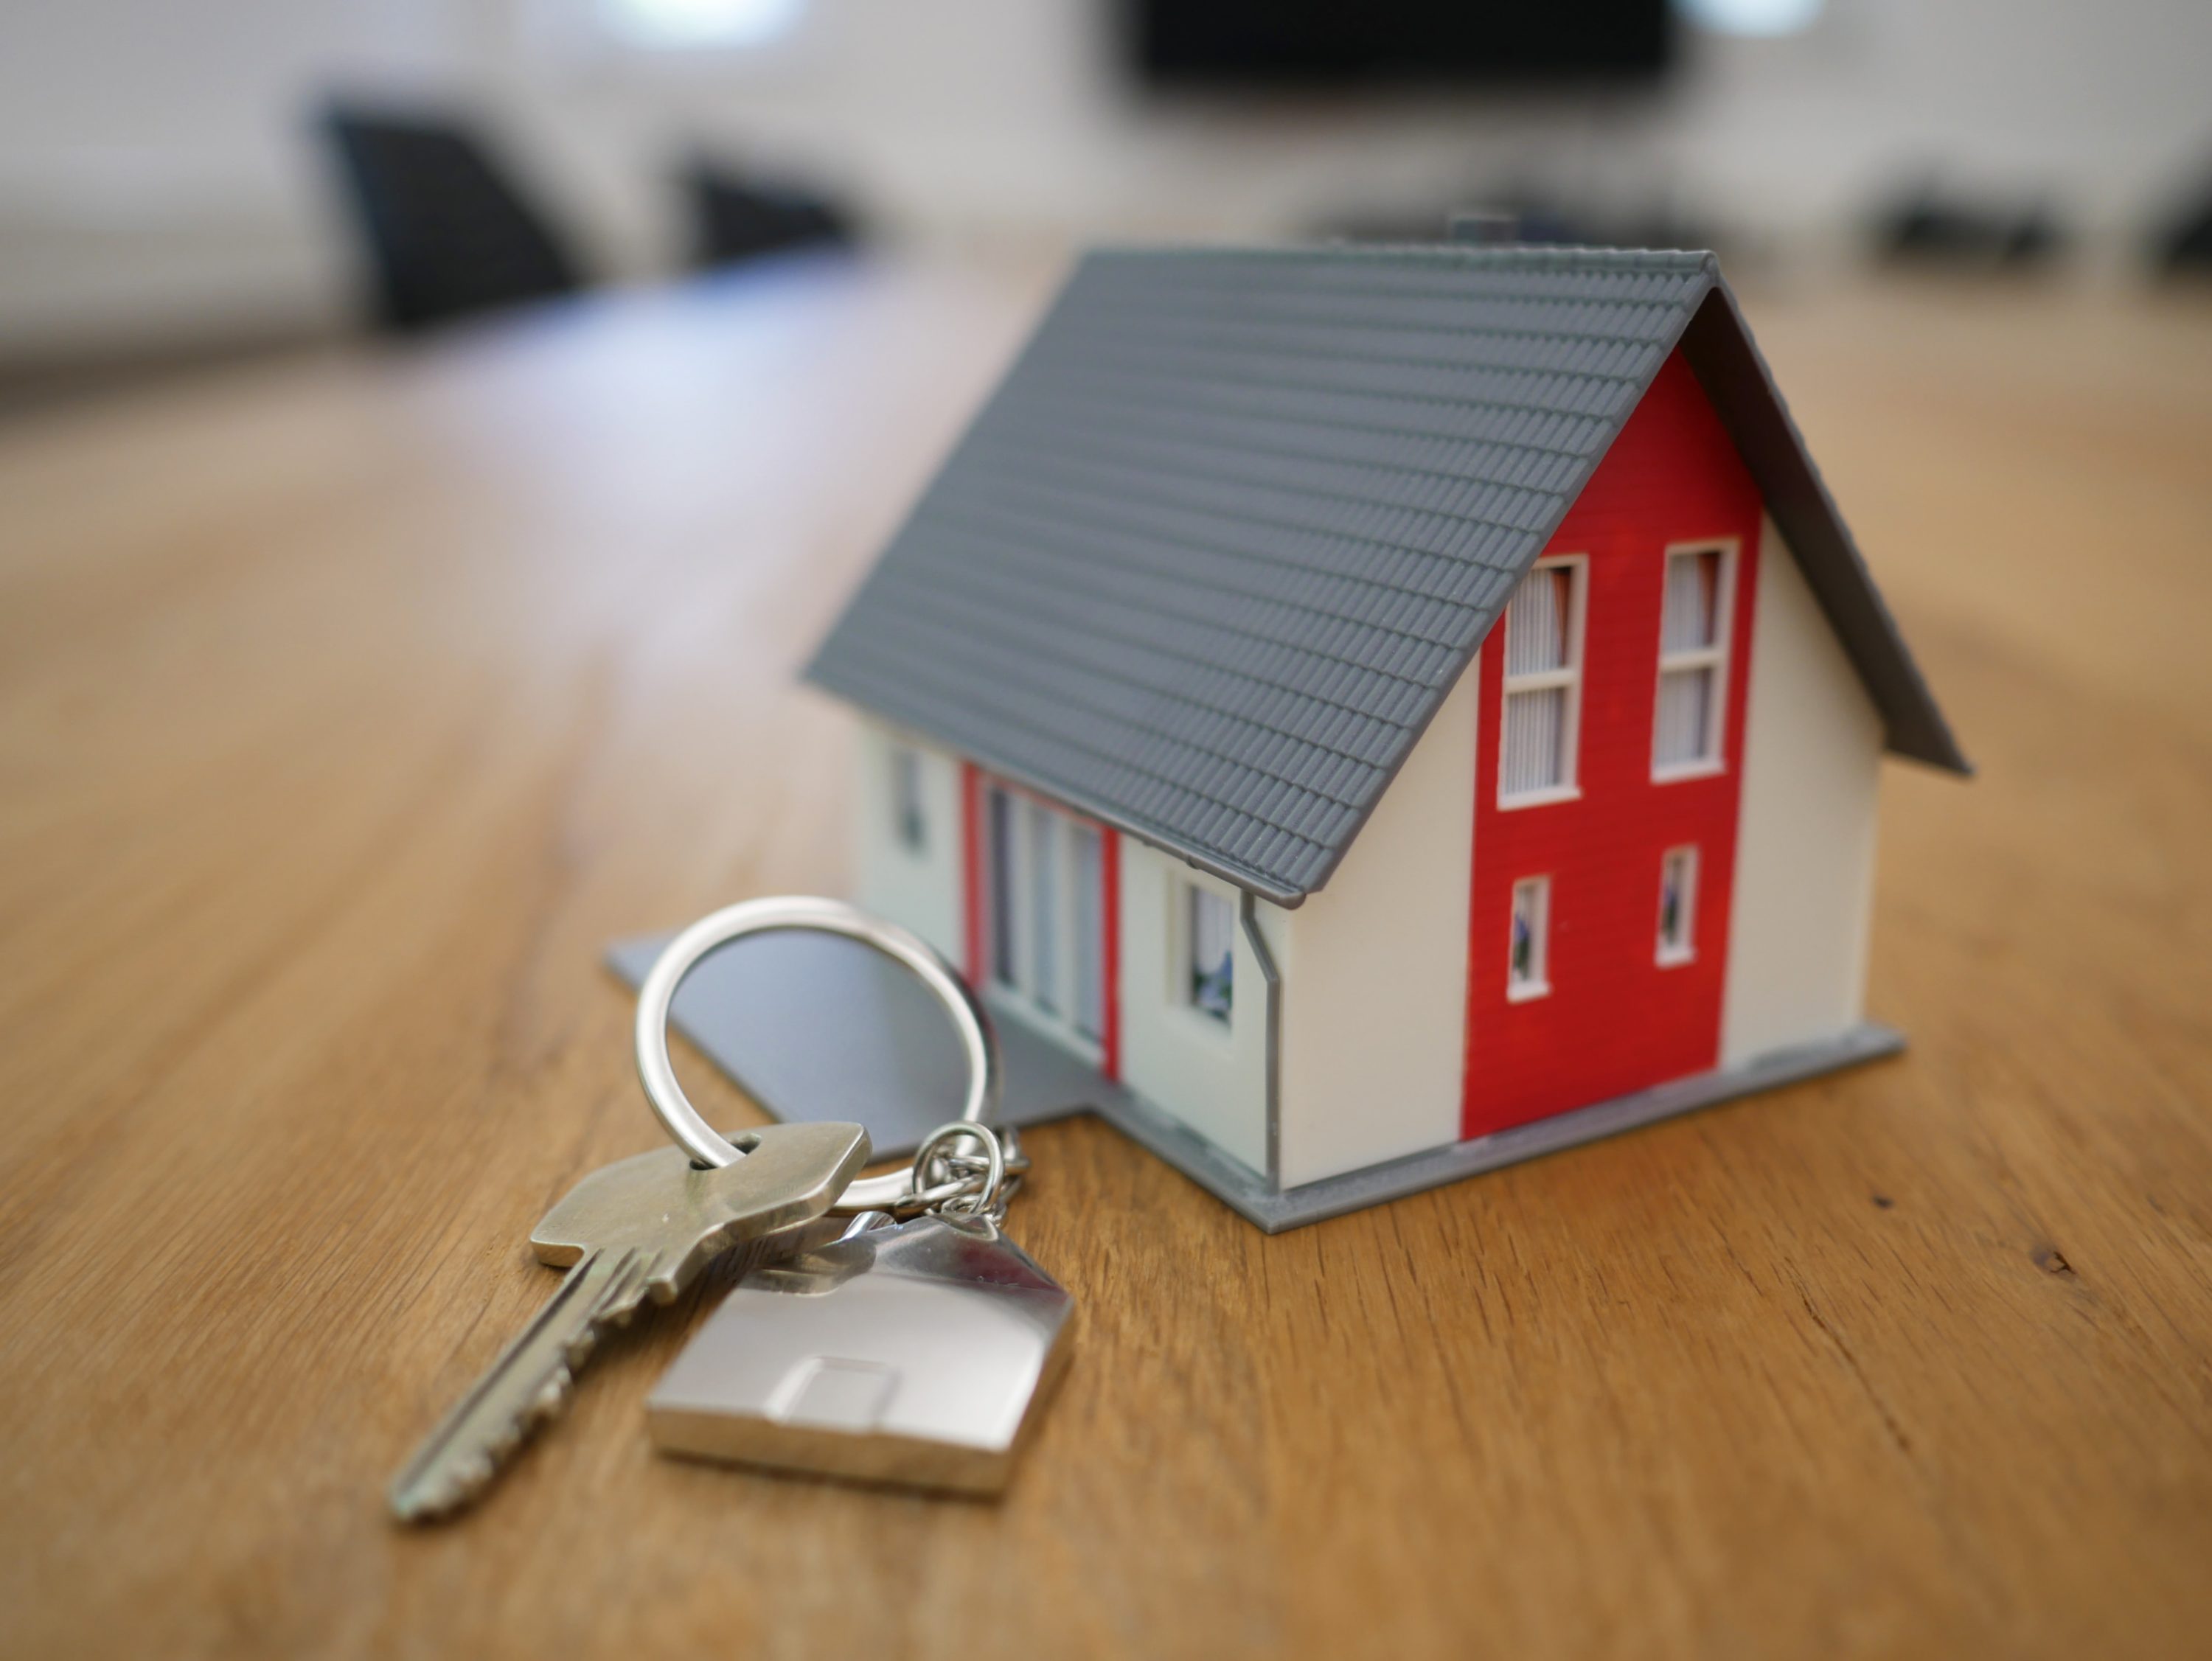 Miniature Model of House and Keys